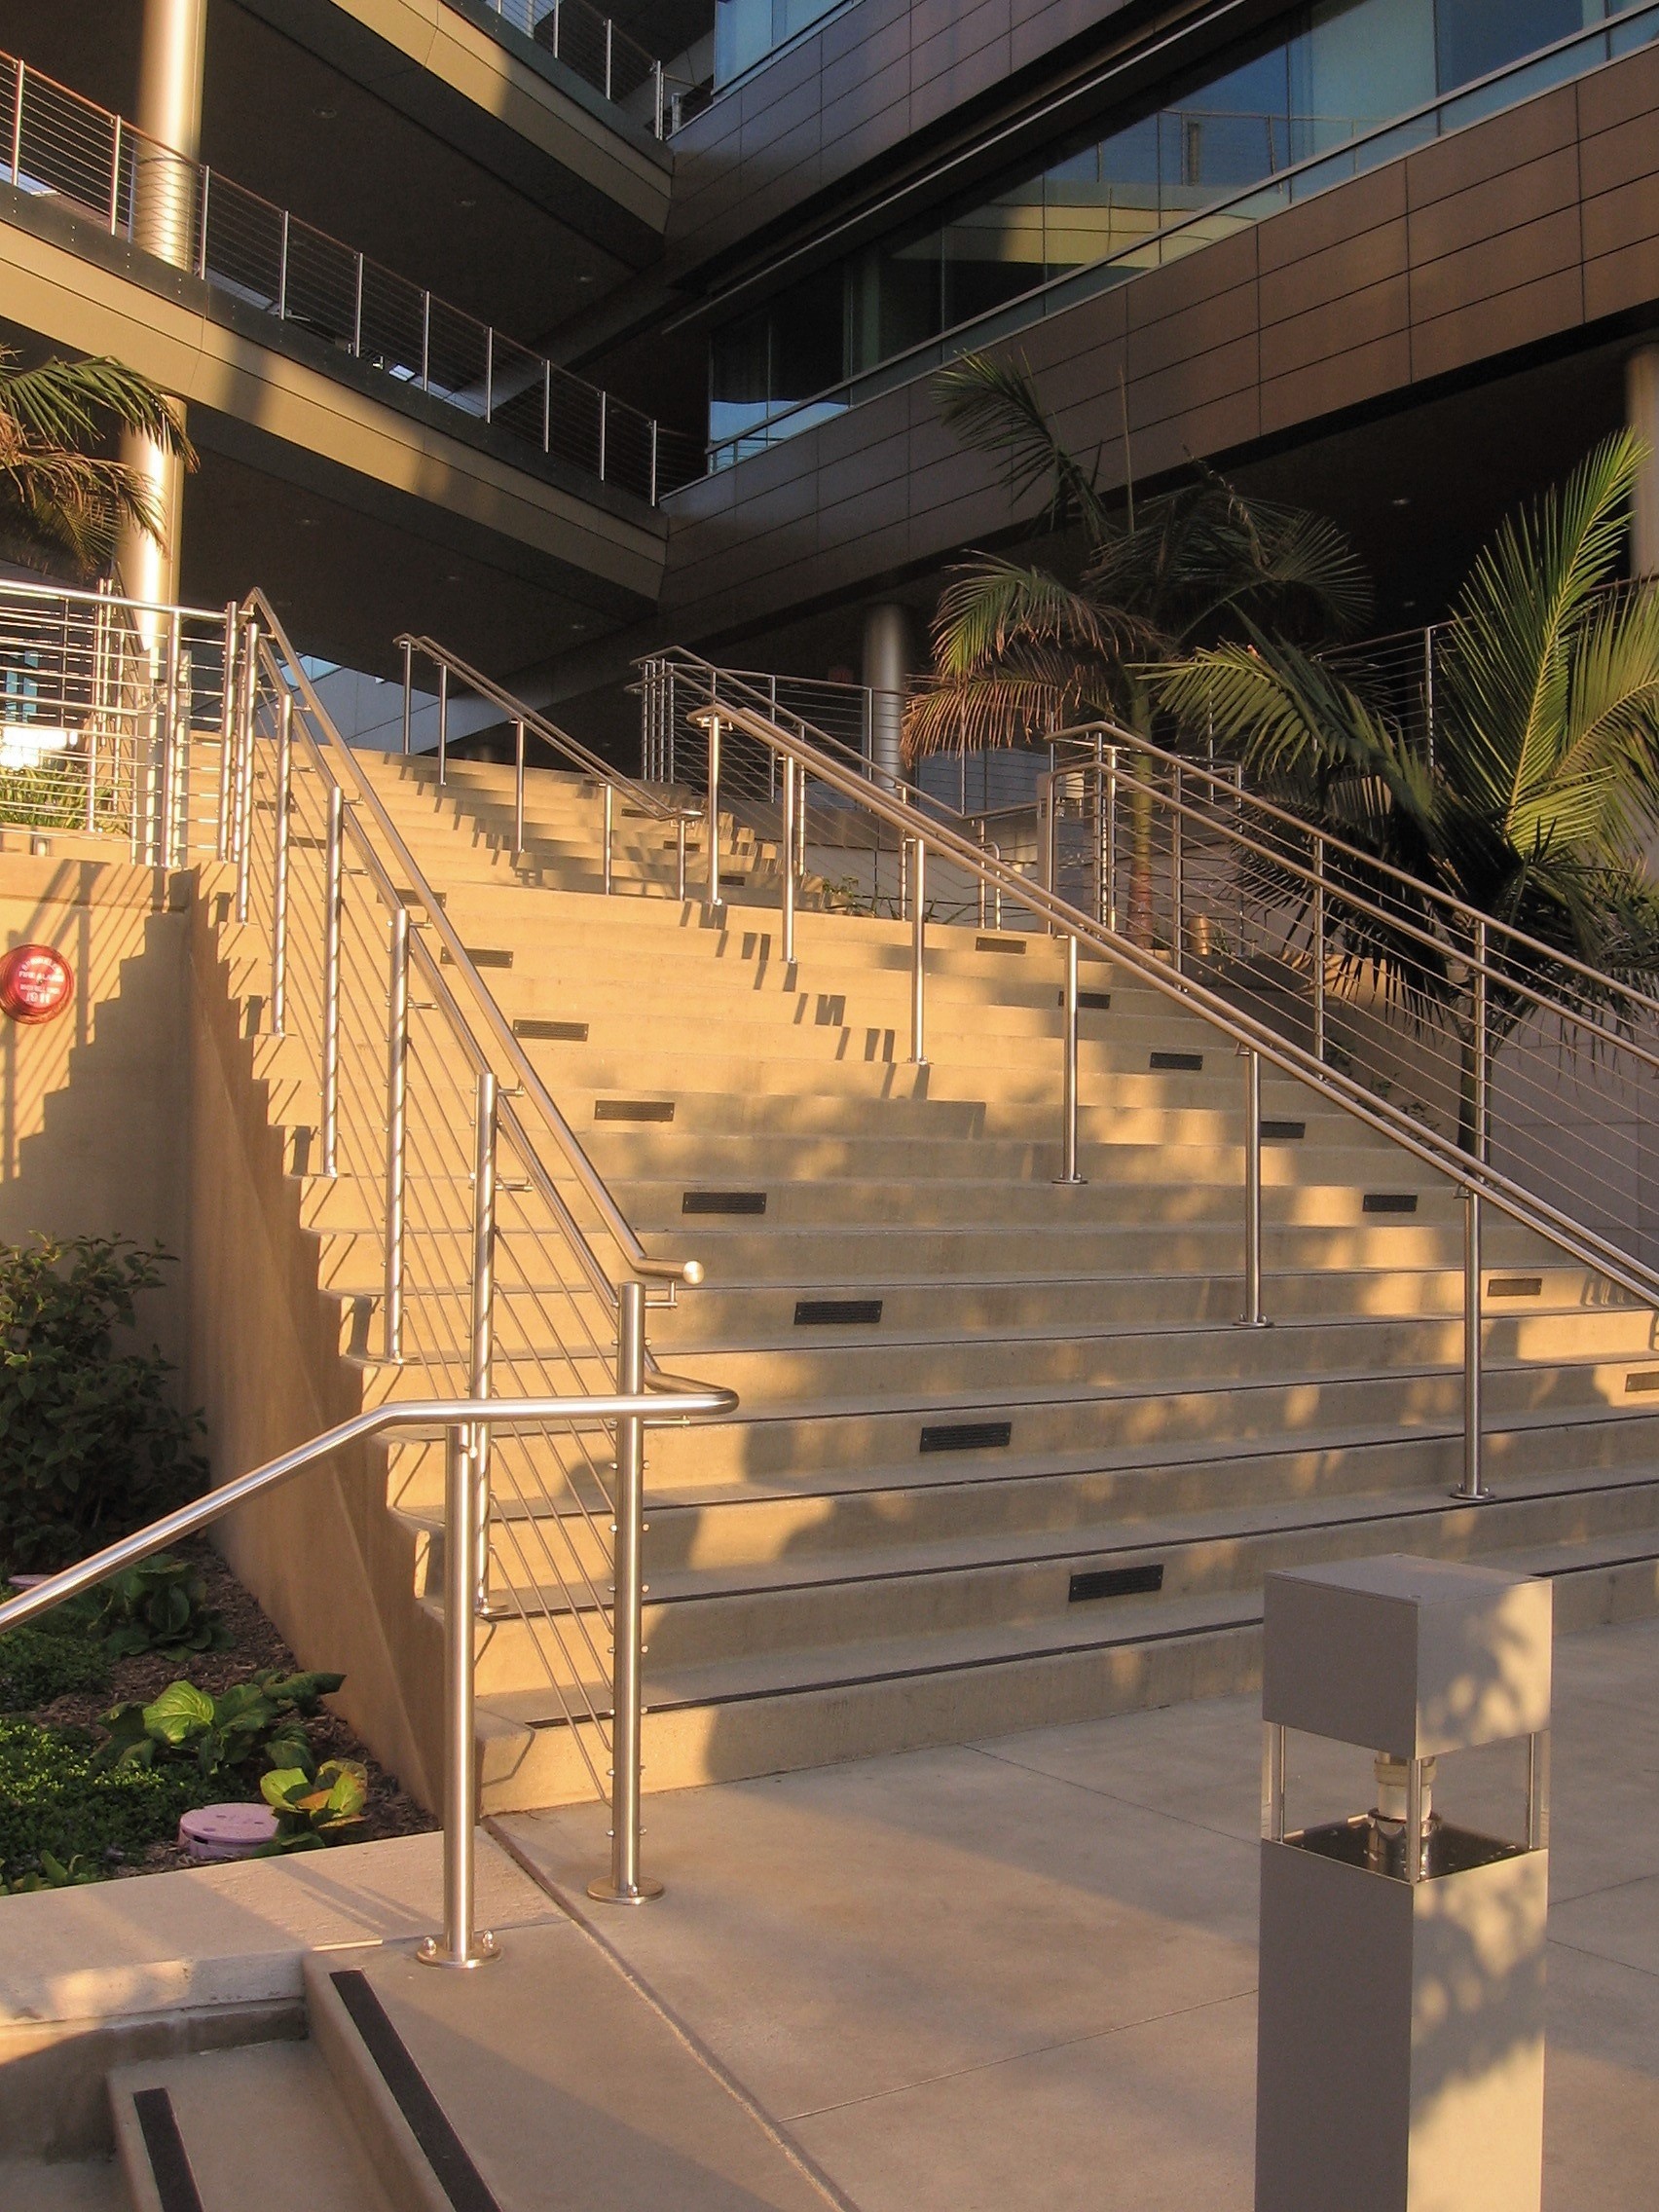 Circum wood handrail installation with horizontal infill rails at the Rady Schoolof Business, CA.